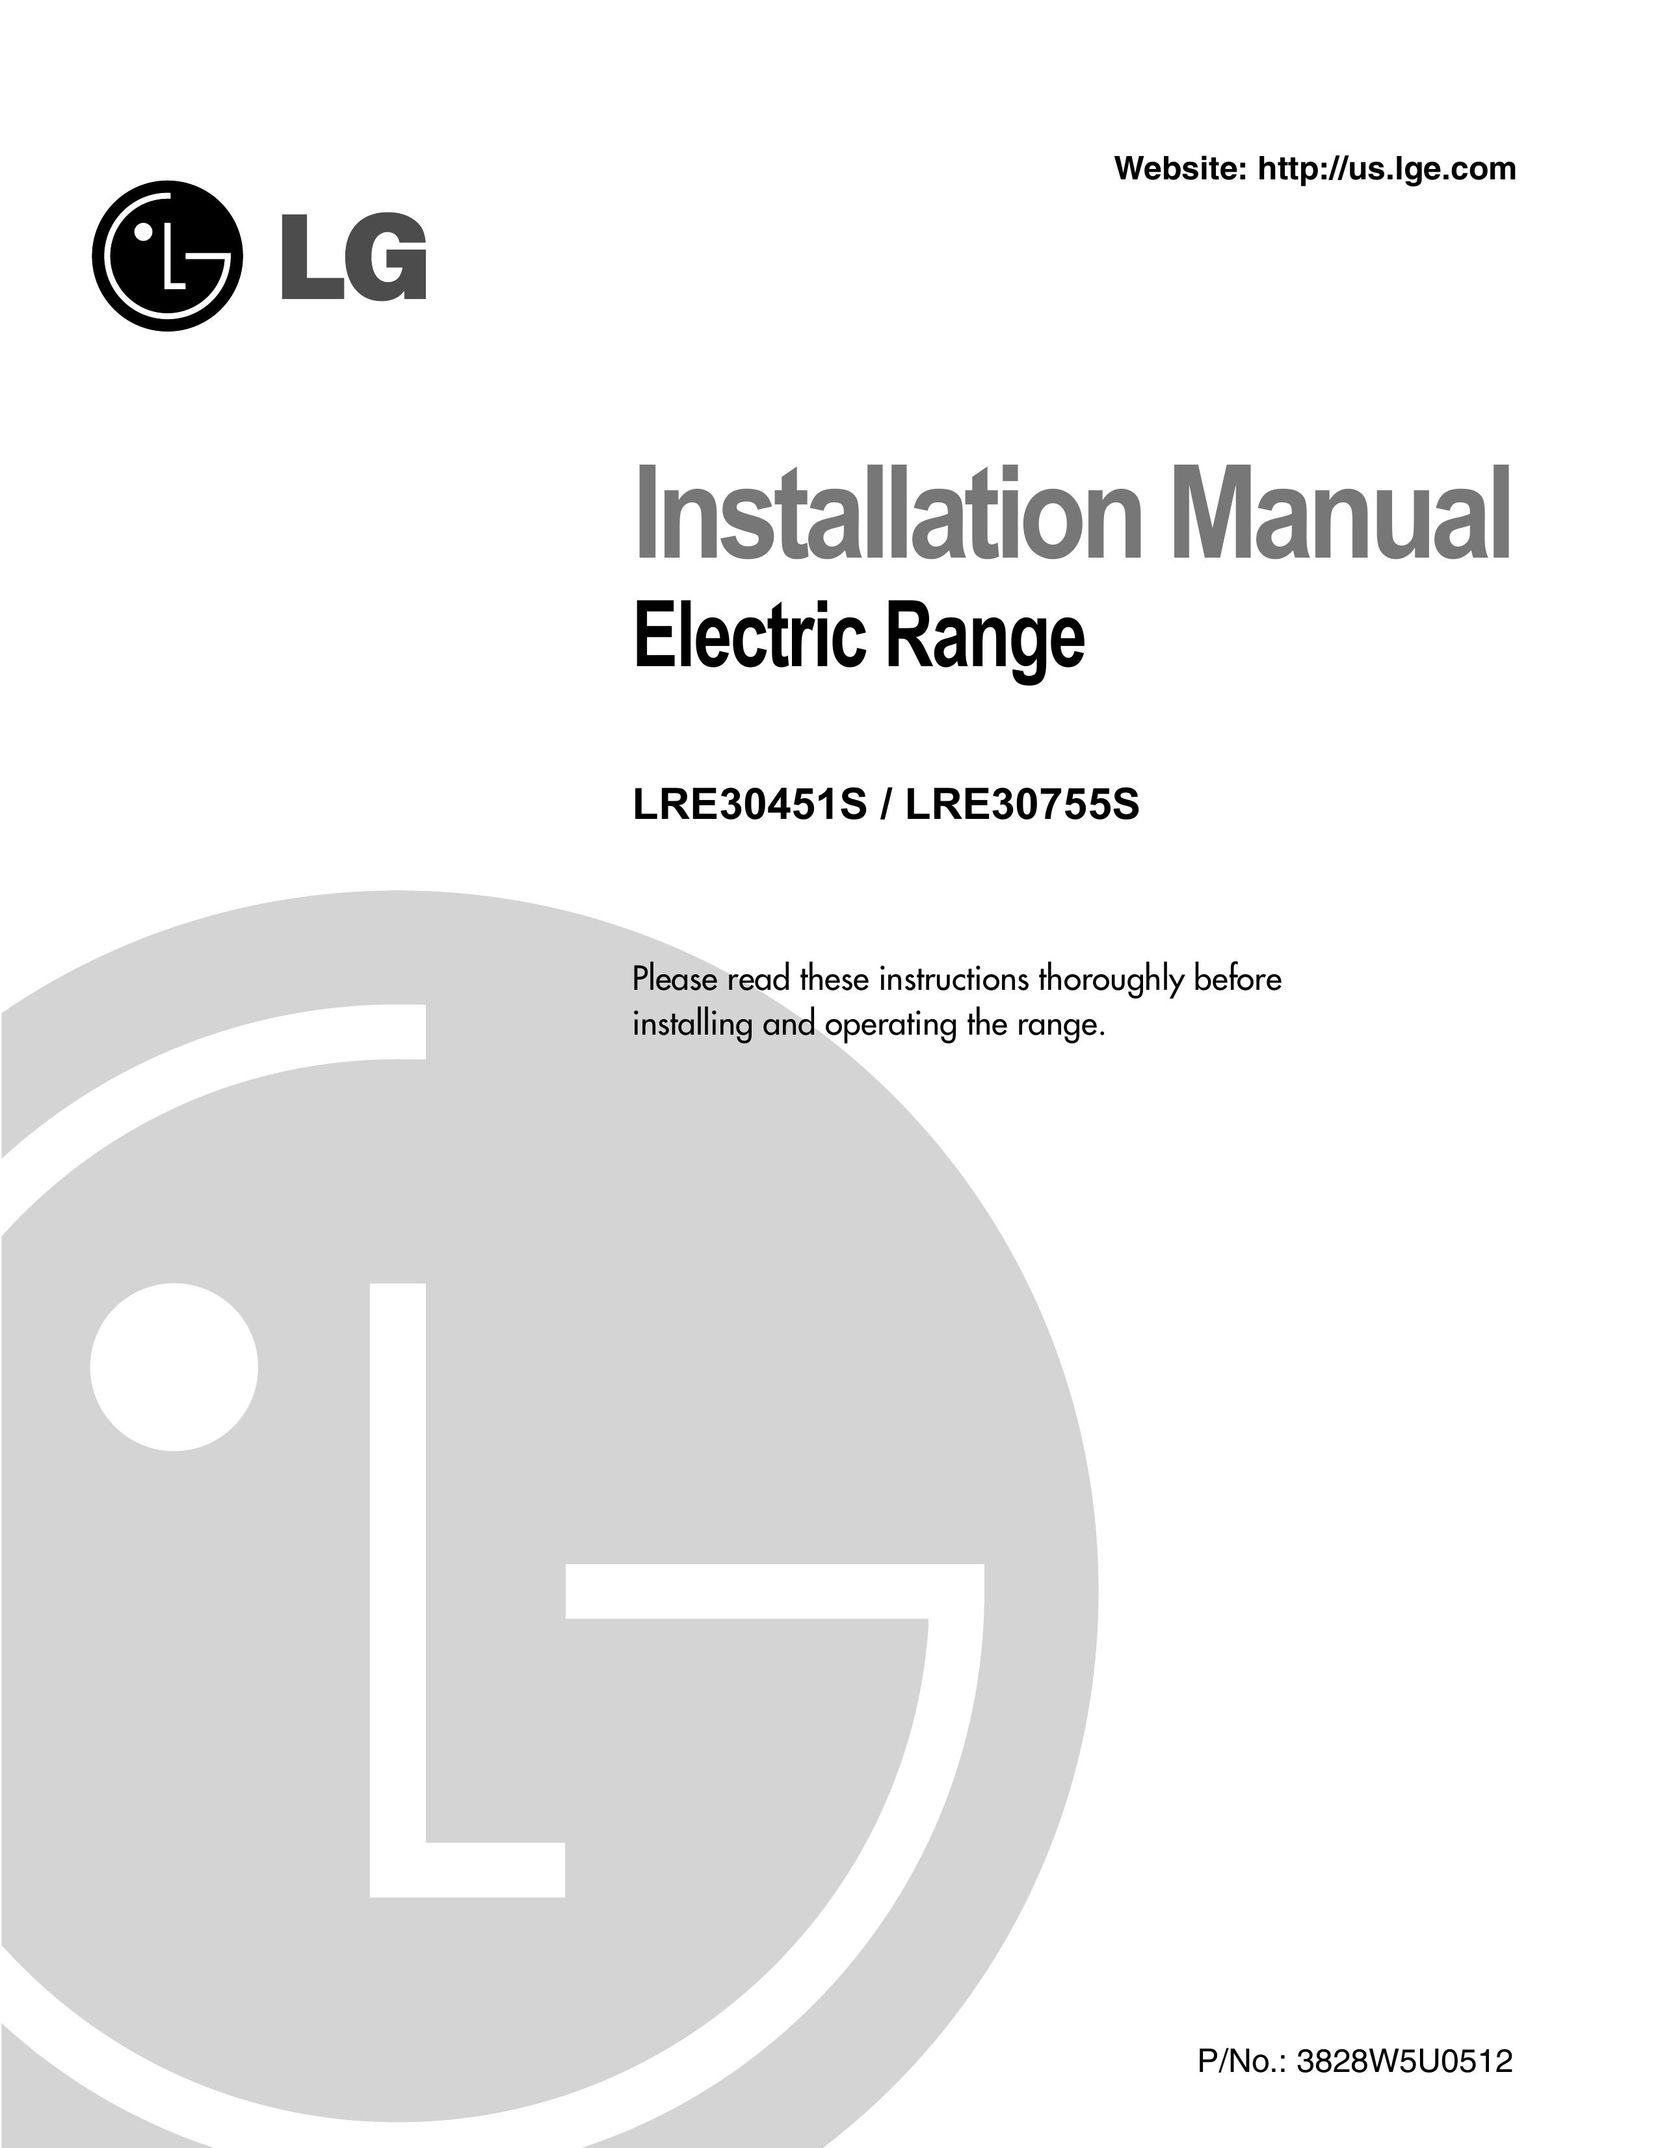 LG Electronics LRE30755S Range User Manual